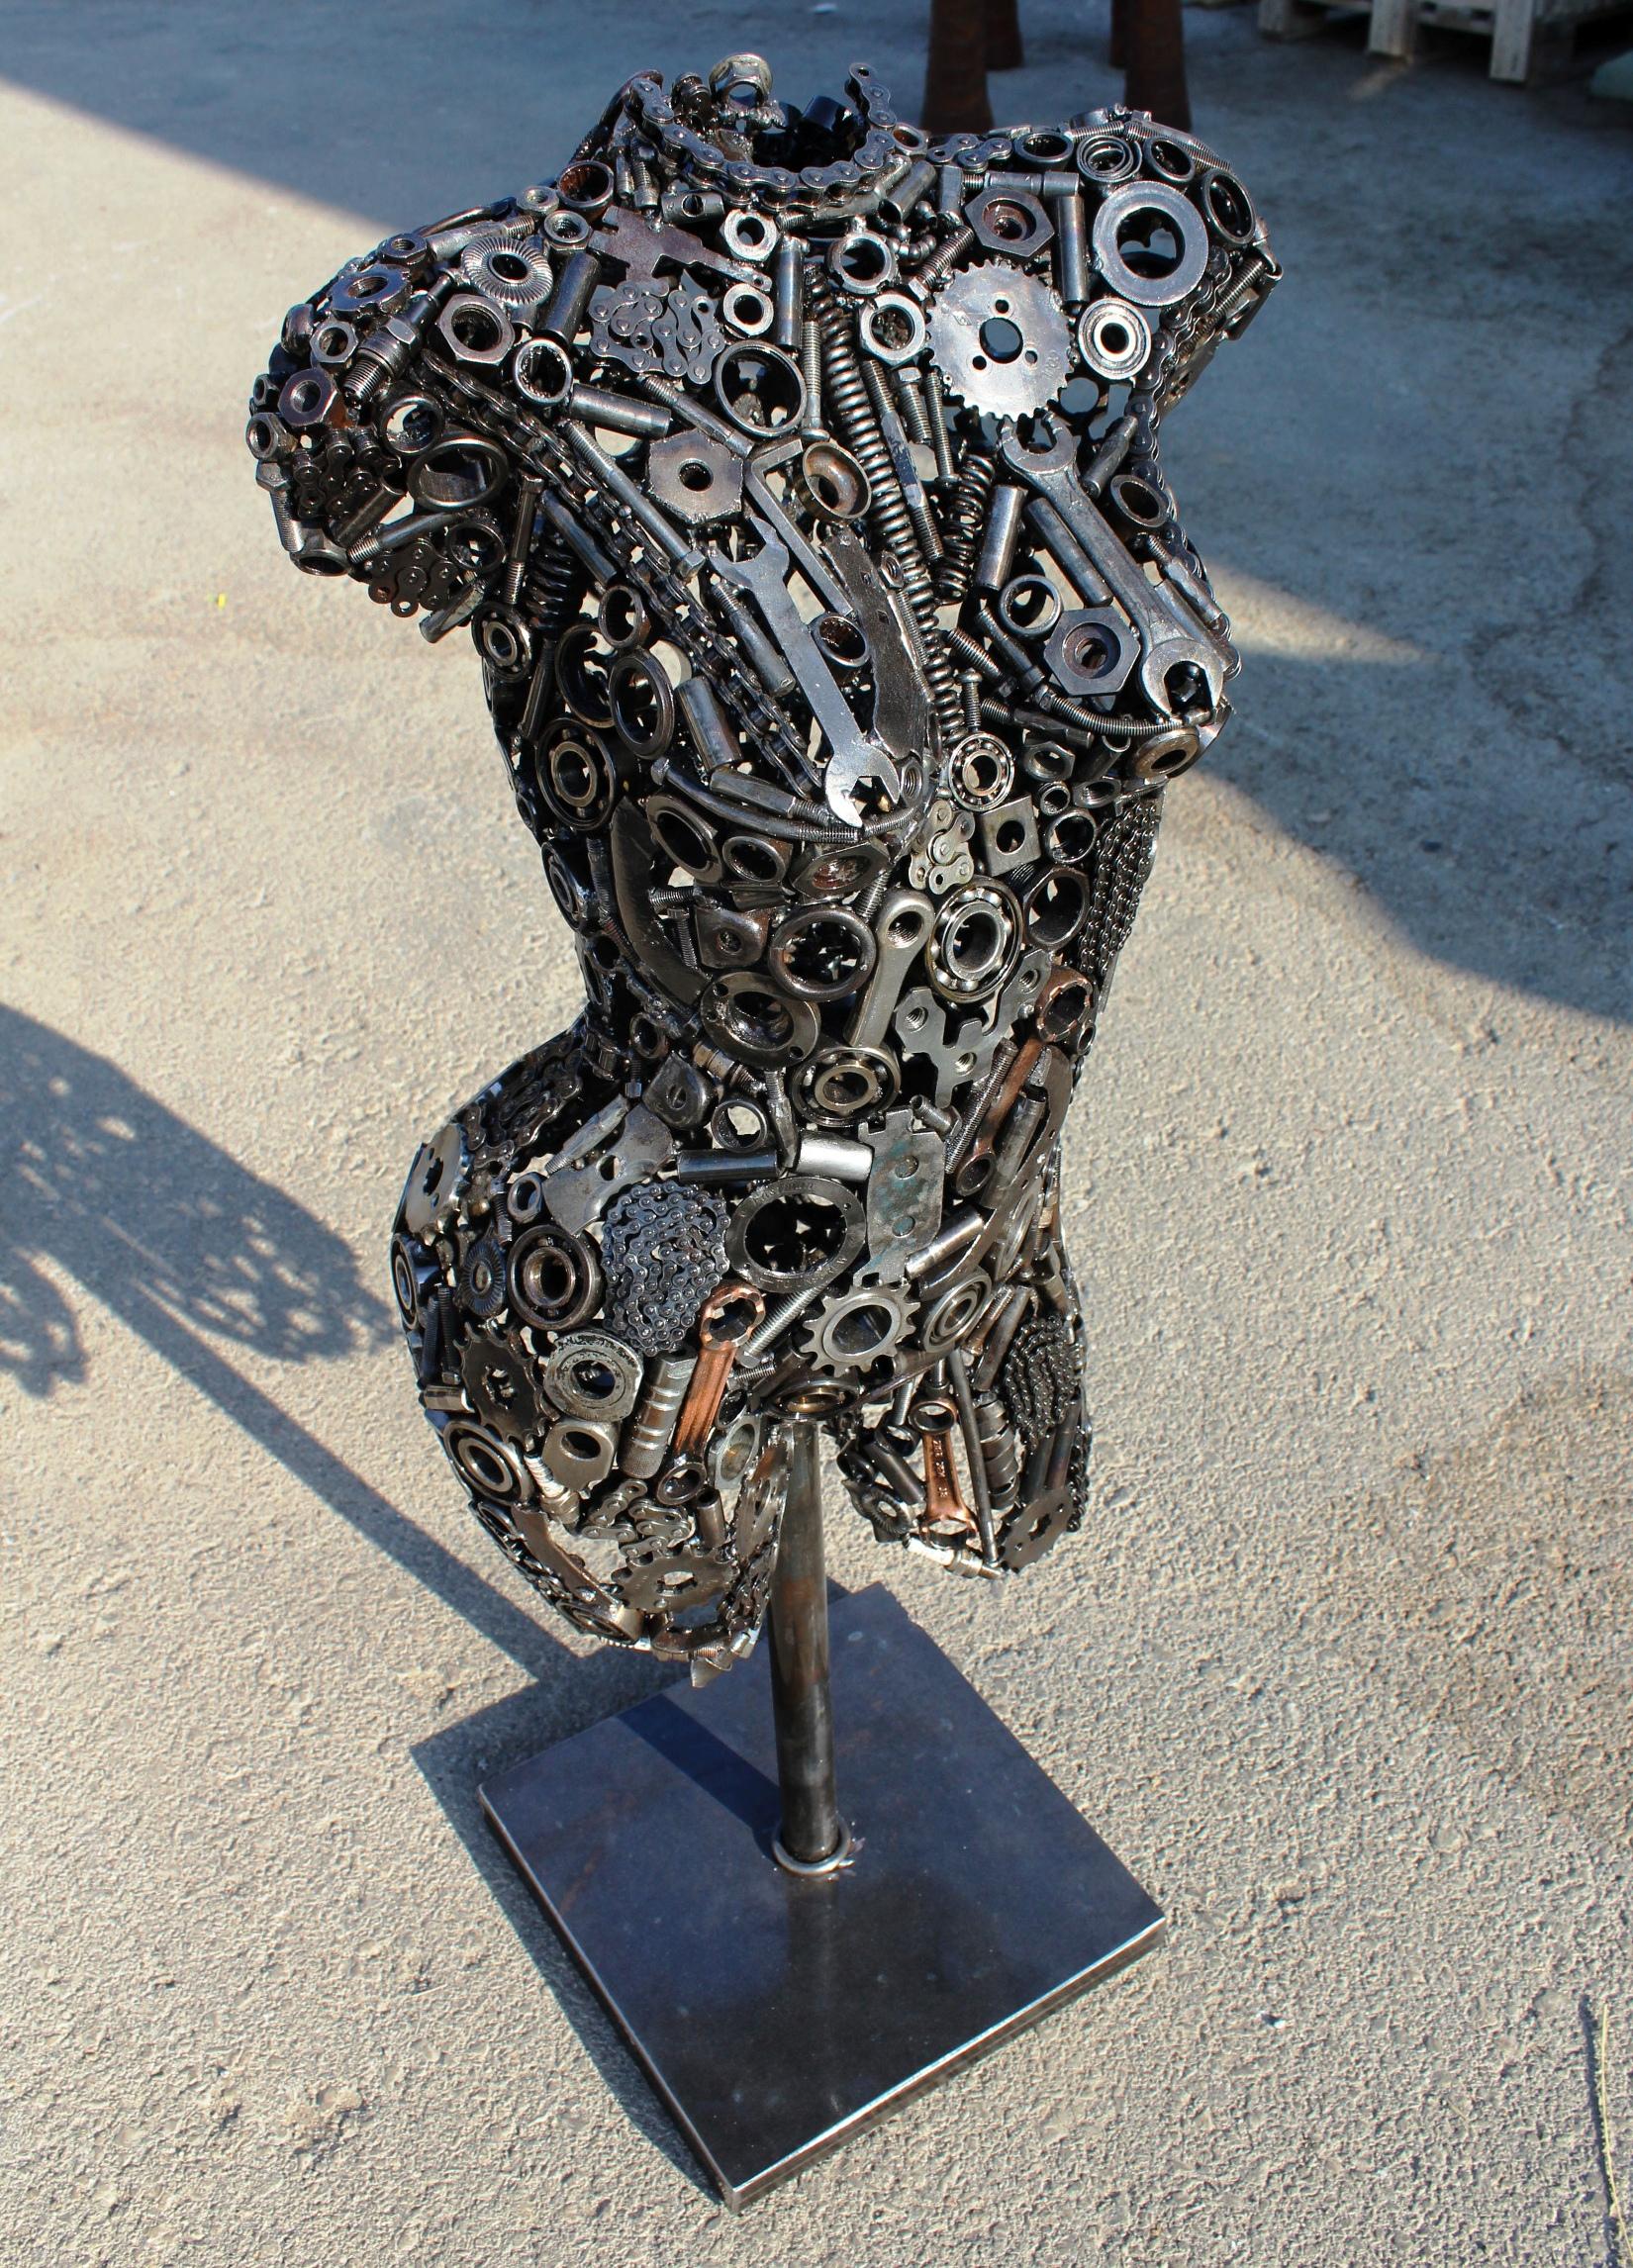 Modernist iron torso sculpture made up of mechanical parts.
 
 